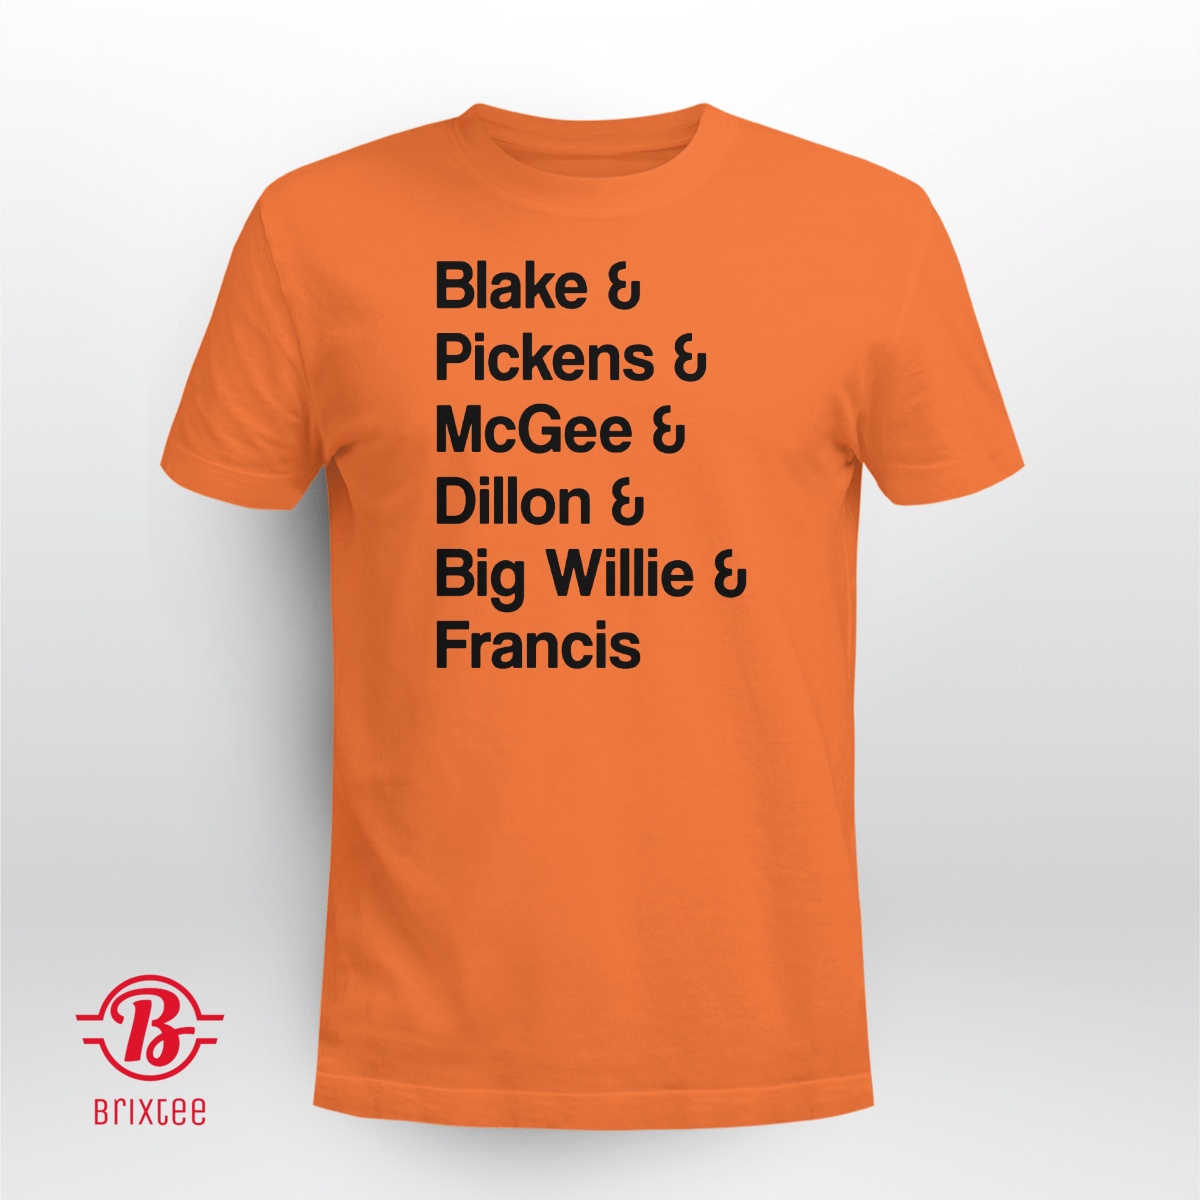 Blake & Pickens & Dillon & Big Willie & Francis